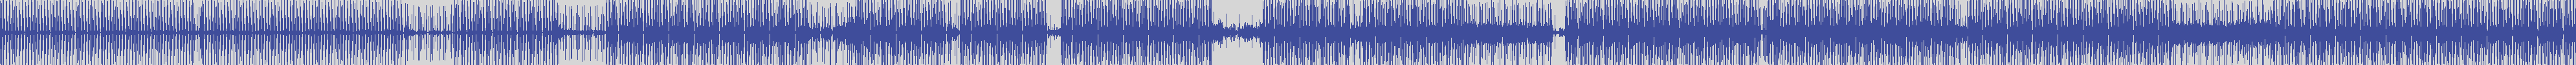 atomic_recordings [AR017] Gain - Work Out [Original Mix] audio wave form